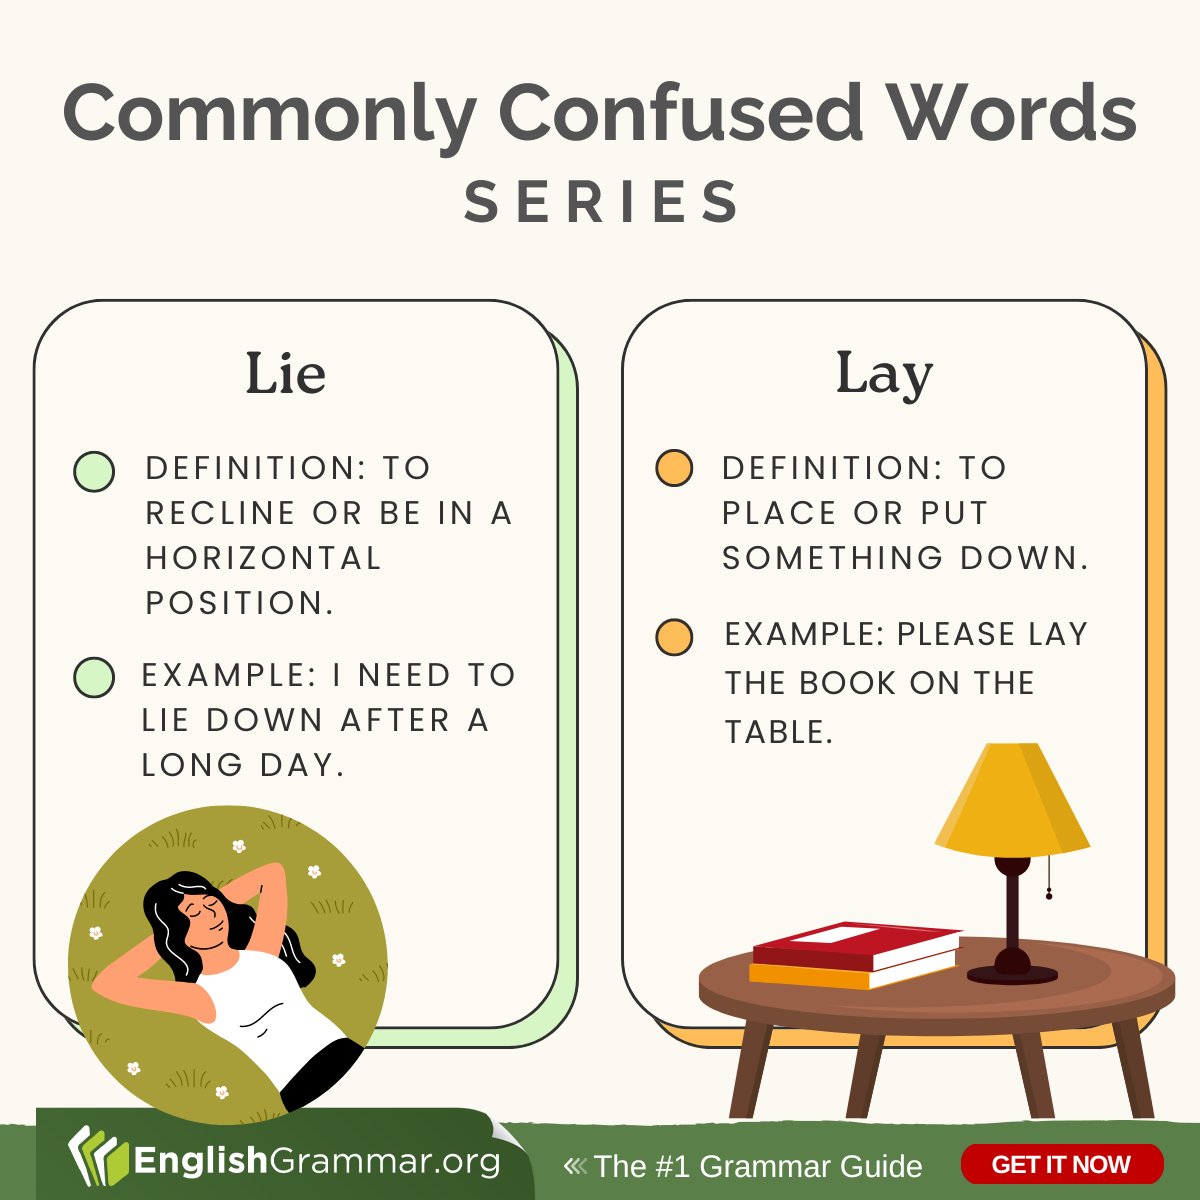 Lie vs. Lay

#vocabulary #amwriting #writing